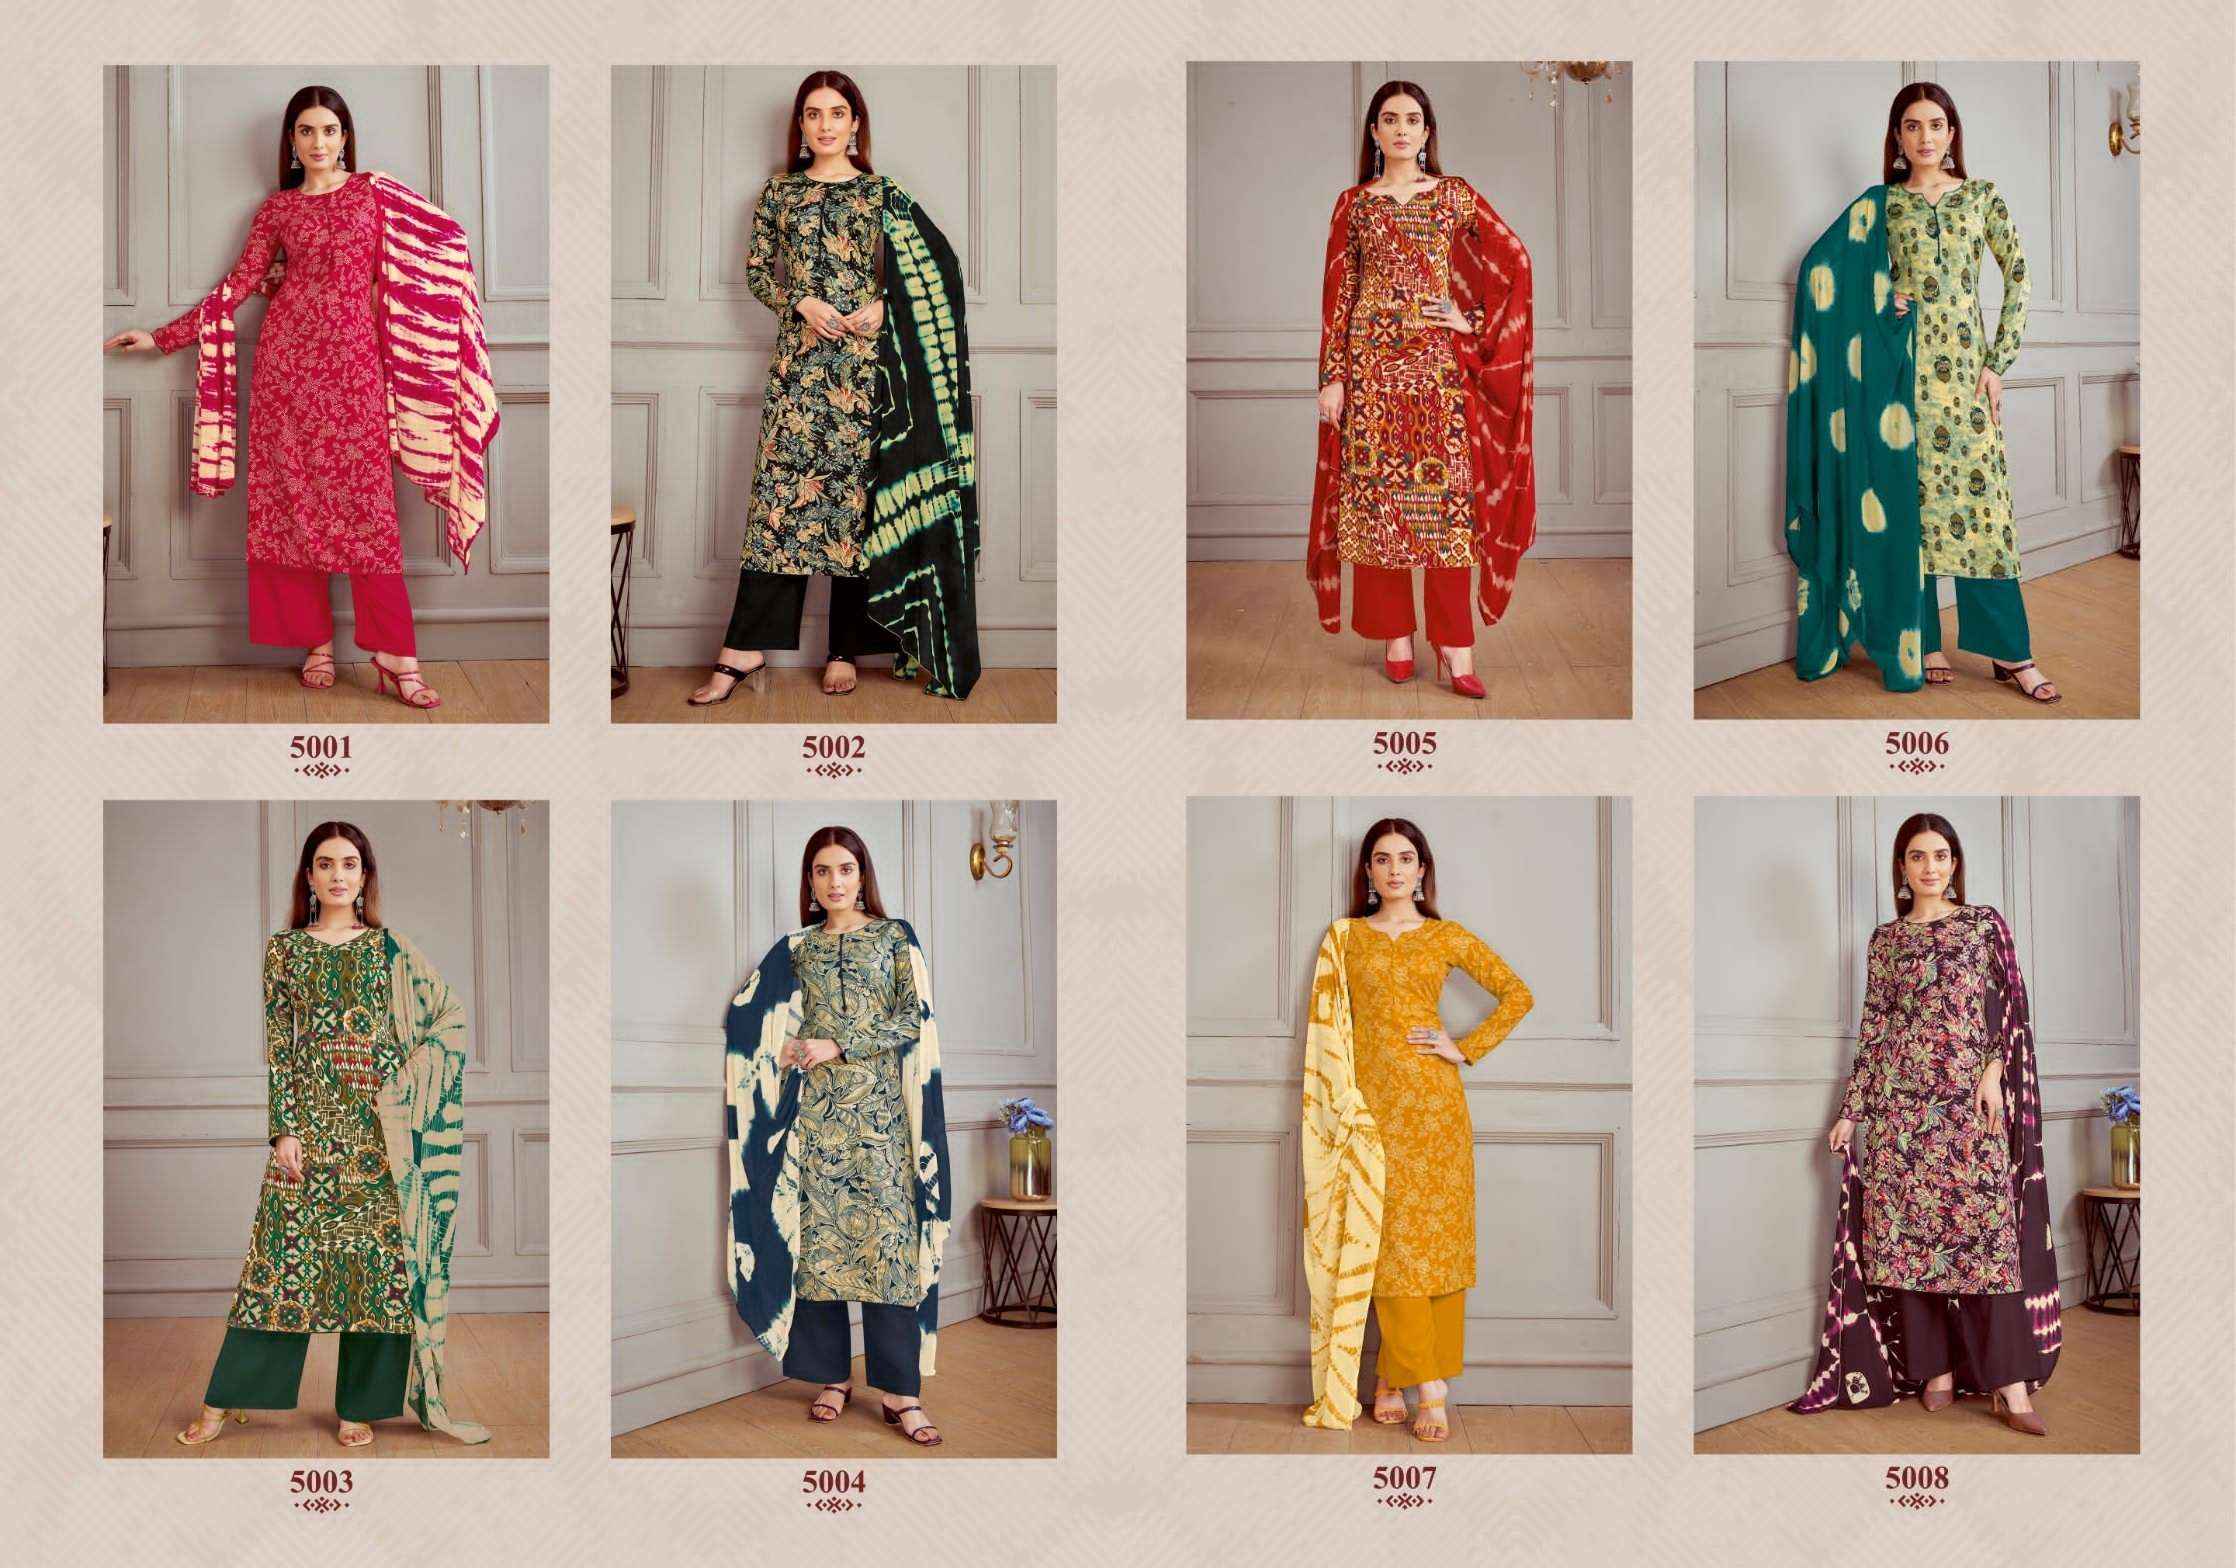 Suryajyoti Paroo Vol 5 Rayon Dress Material 8 pcs Catalogue